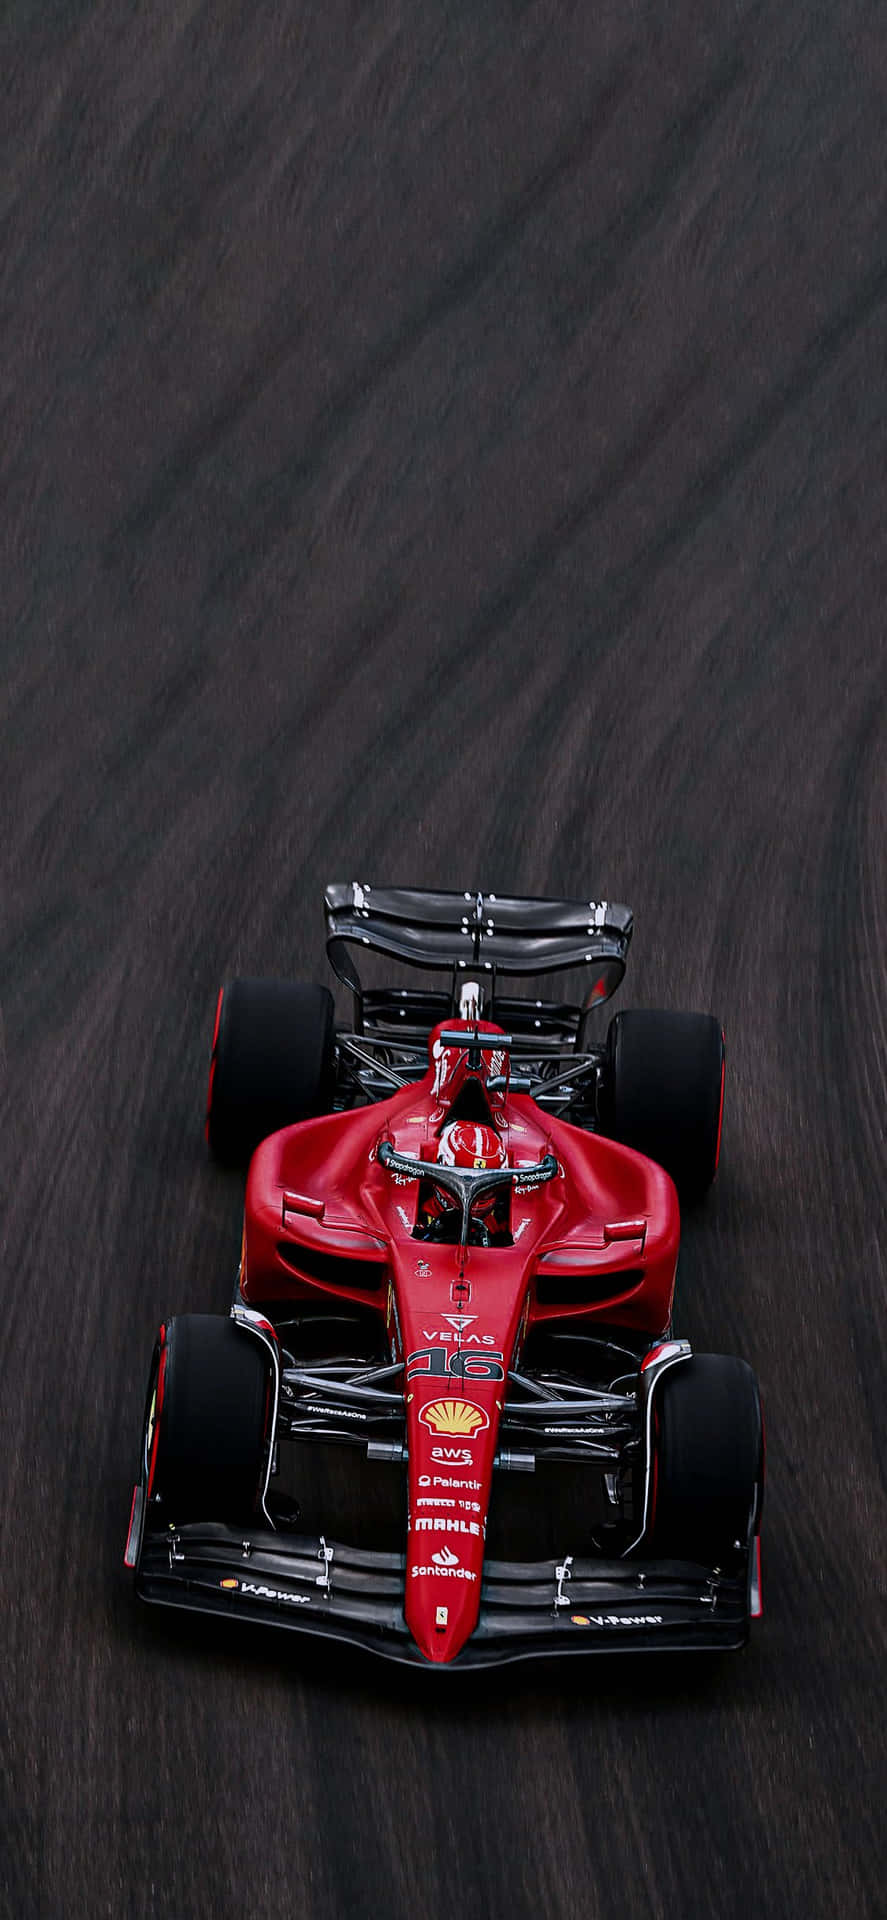 Ferrari F1 Racingon Track.jpg Wallpaper